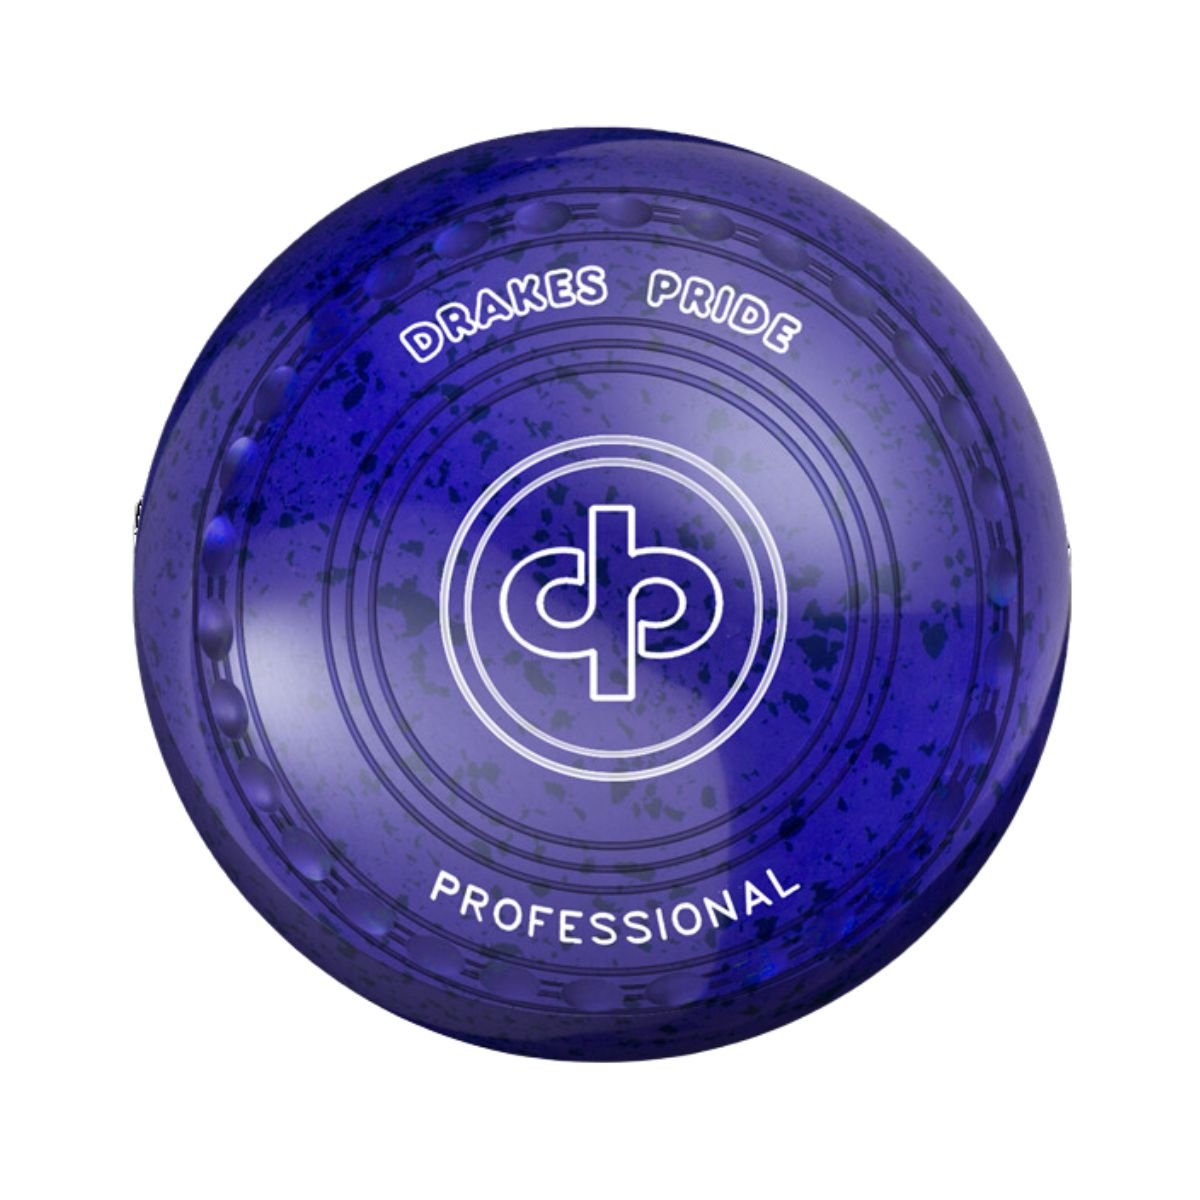 Drakes pride professional coloured bowls - 12